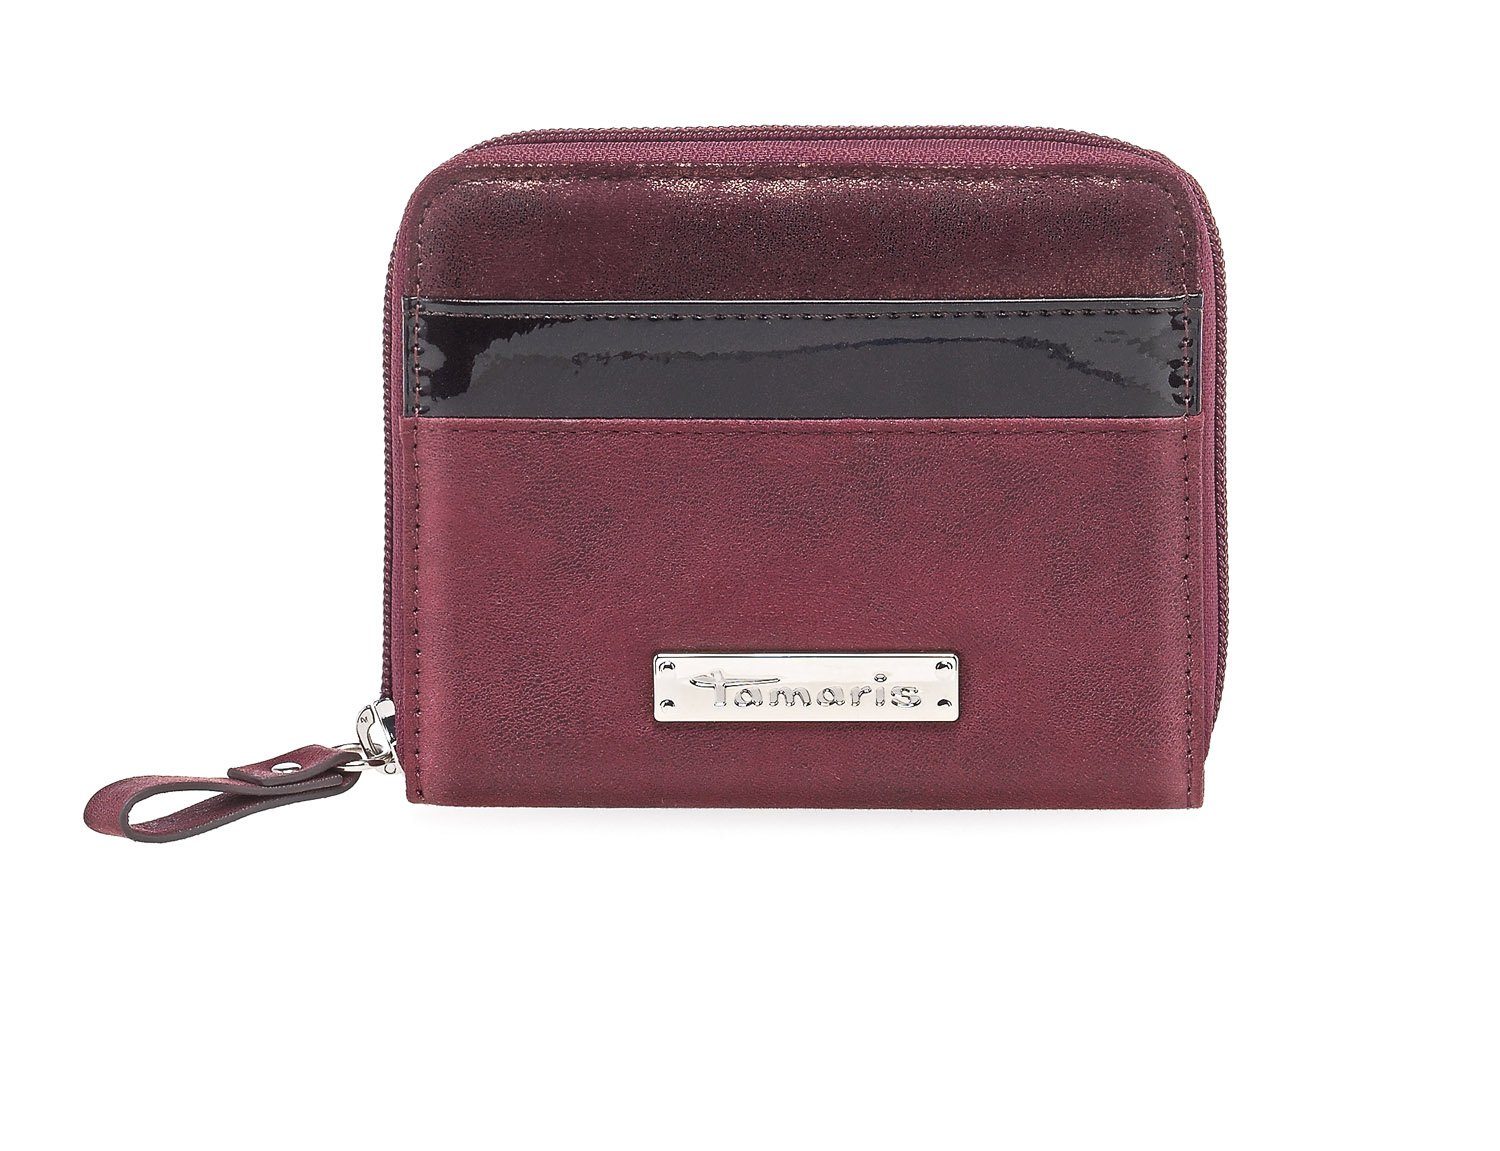 1-tlg., Small rot Tamaris Geldbörse Zip Wallet Set), Brieftasche Geldbörse Khema (Set, bordeaux comb.